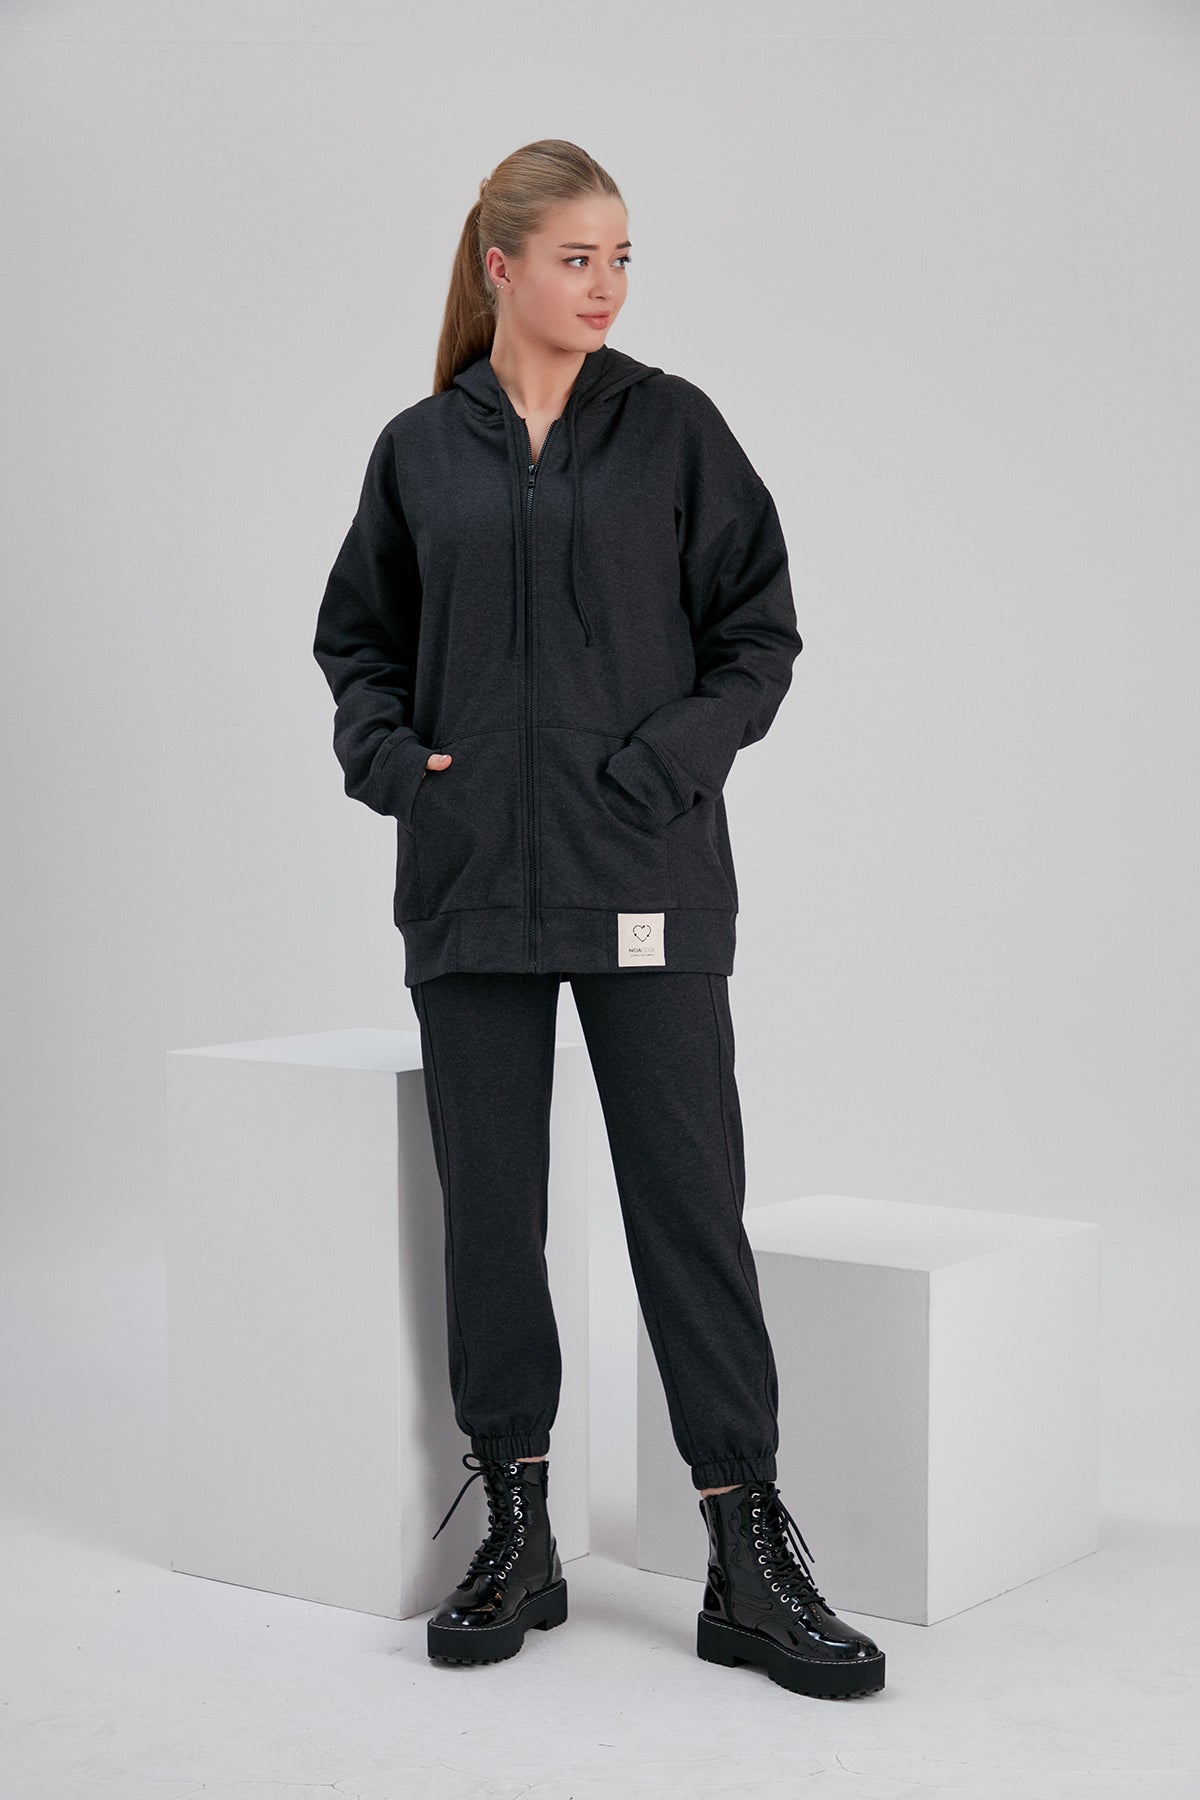 Noacode dark grey ethical eco-friendly sweatpants tall plus size loungewear fashion Netherlands 